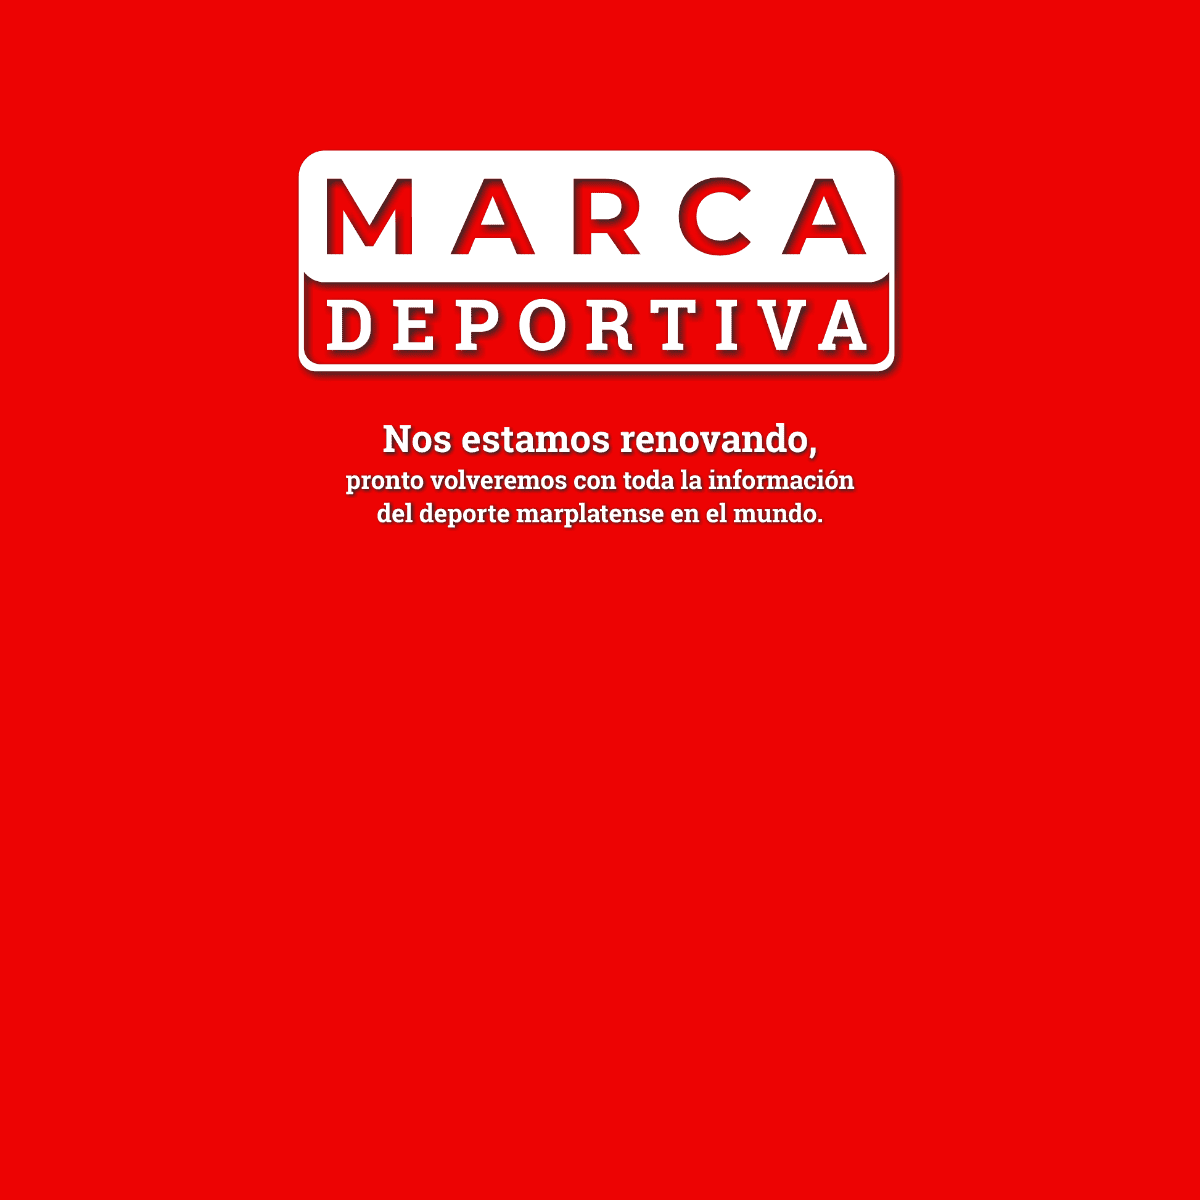 A complete backup of marcadeportiva.com